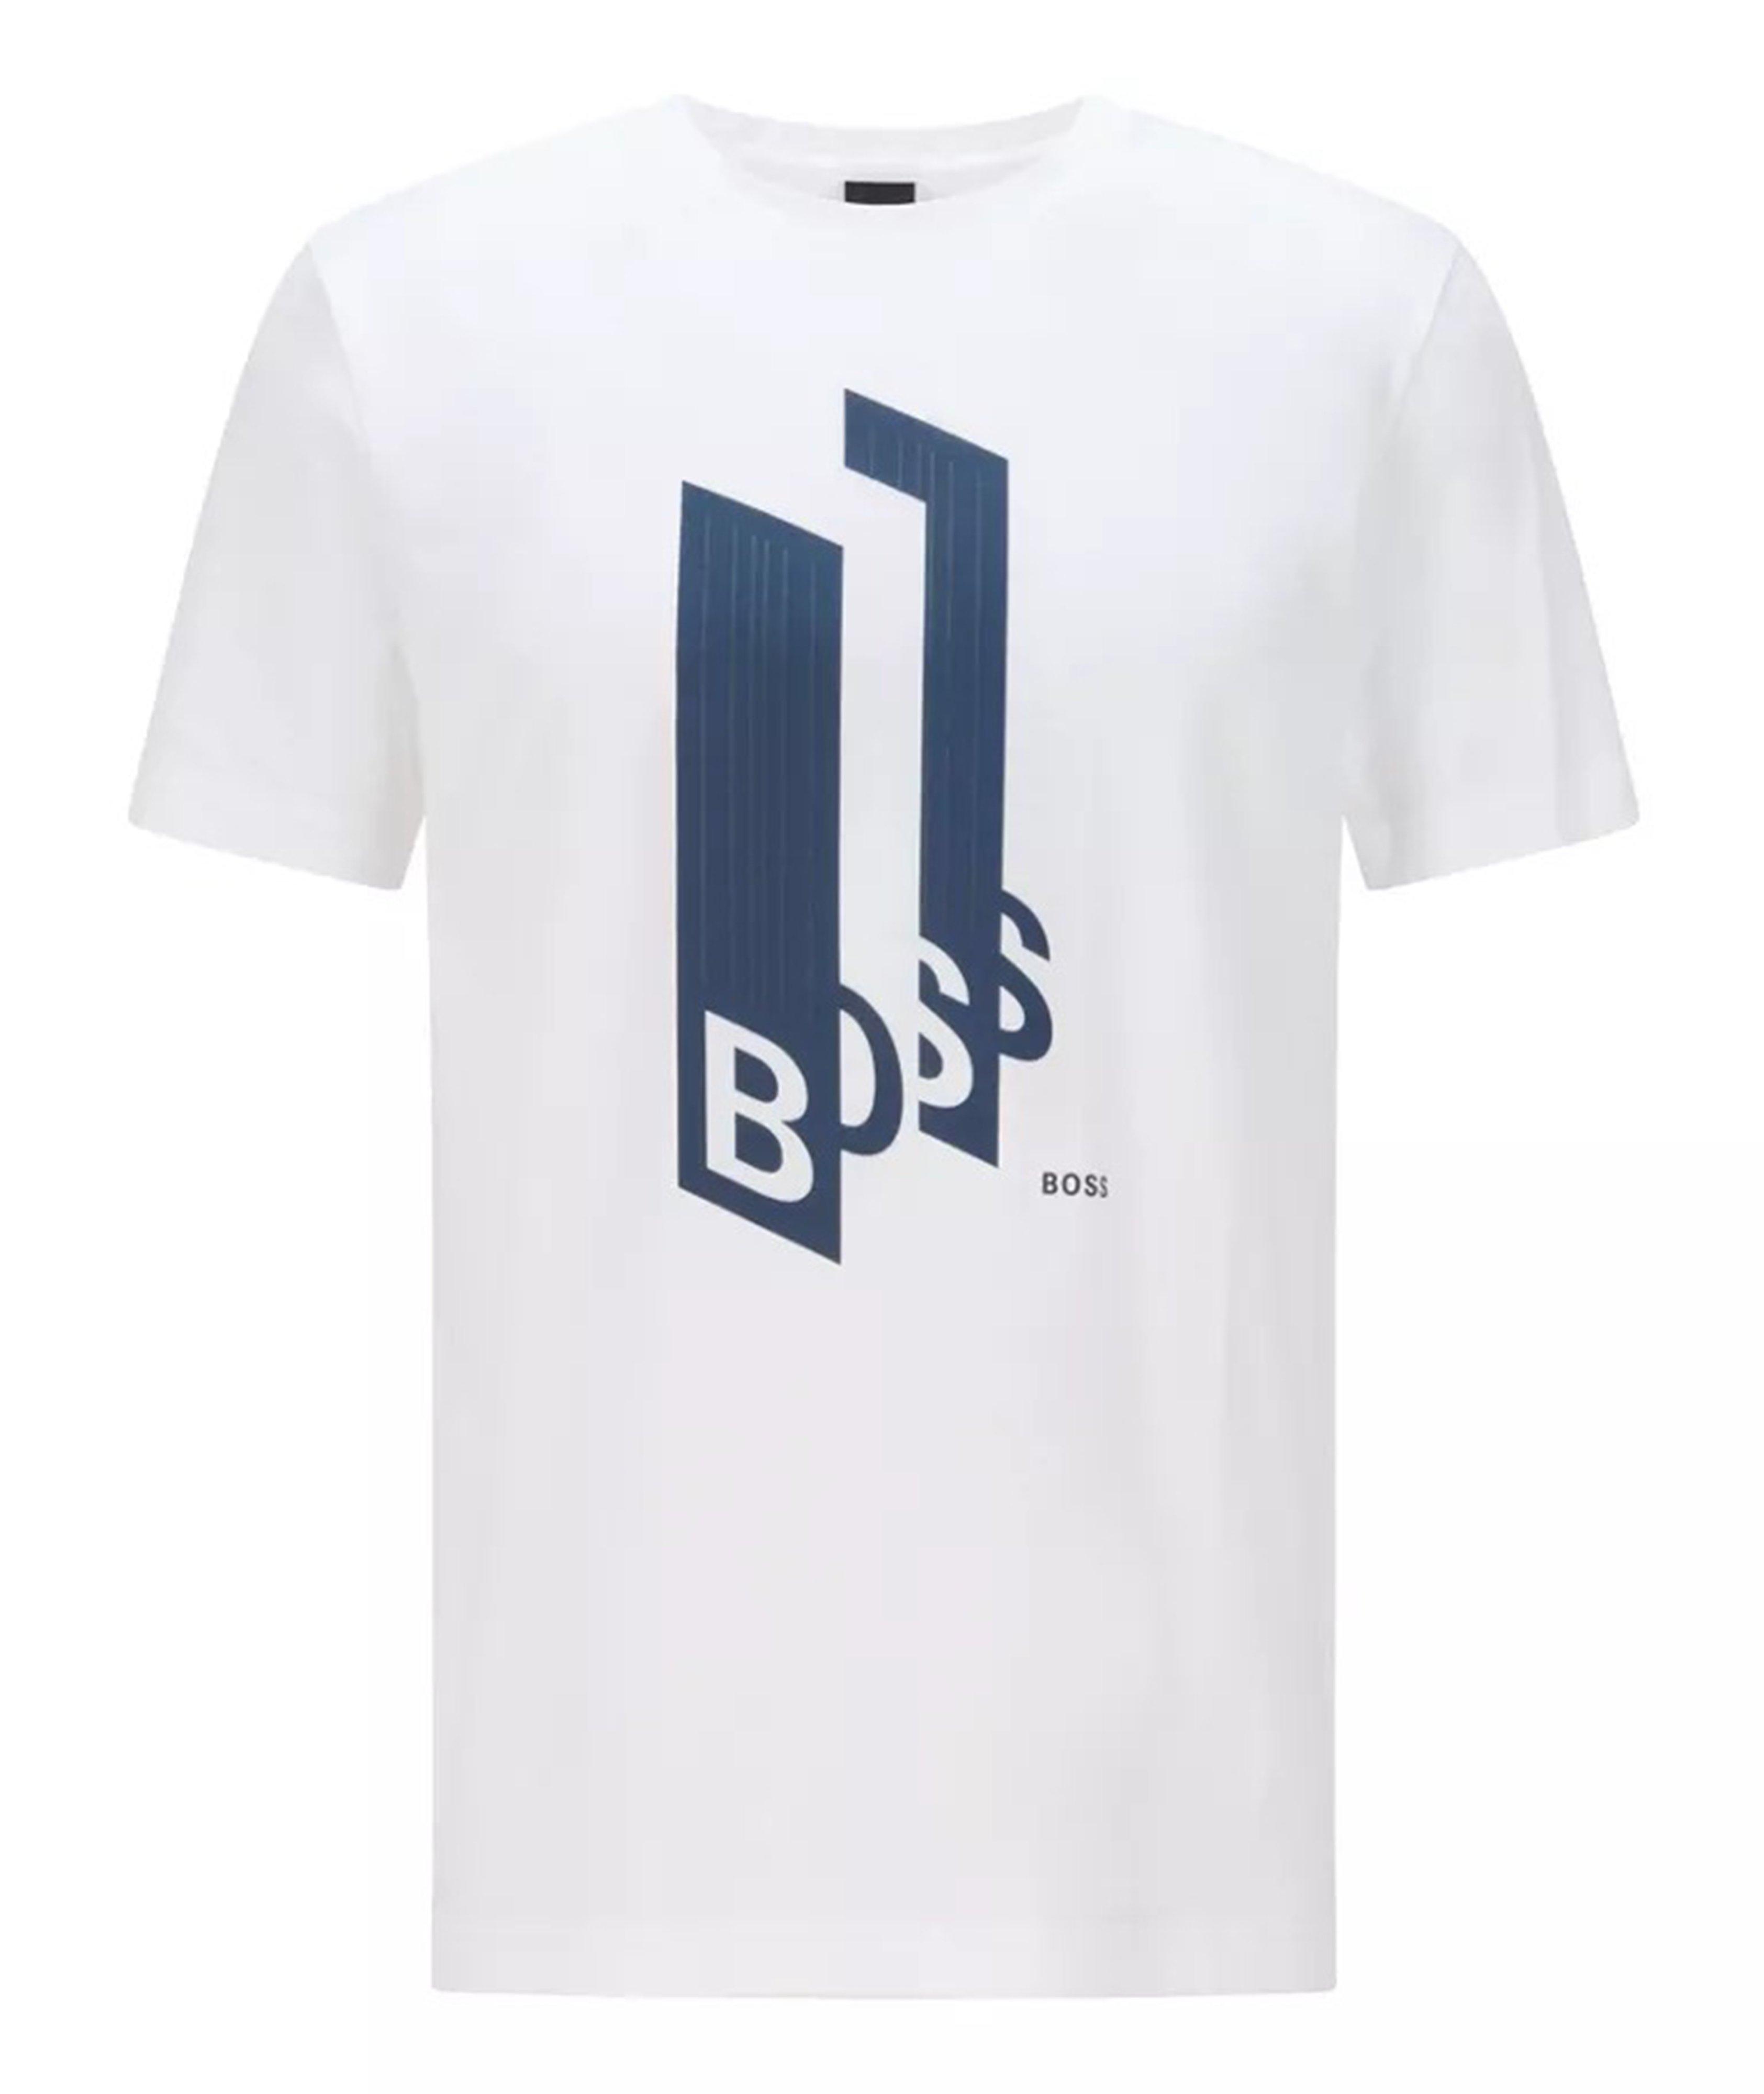 T-shirt avec logo image 0